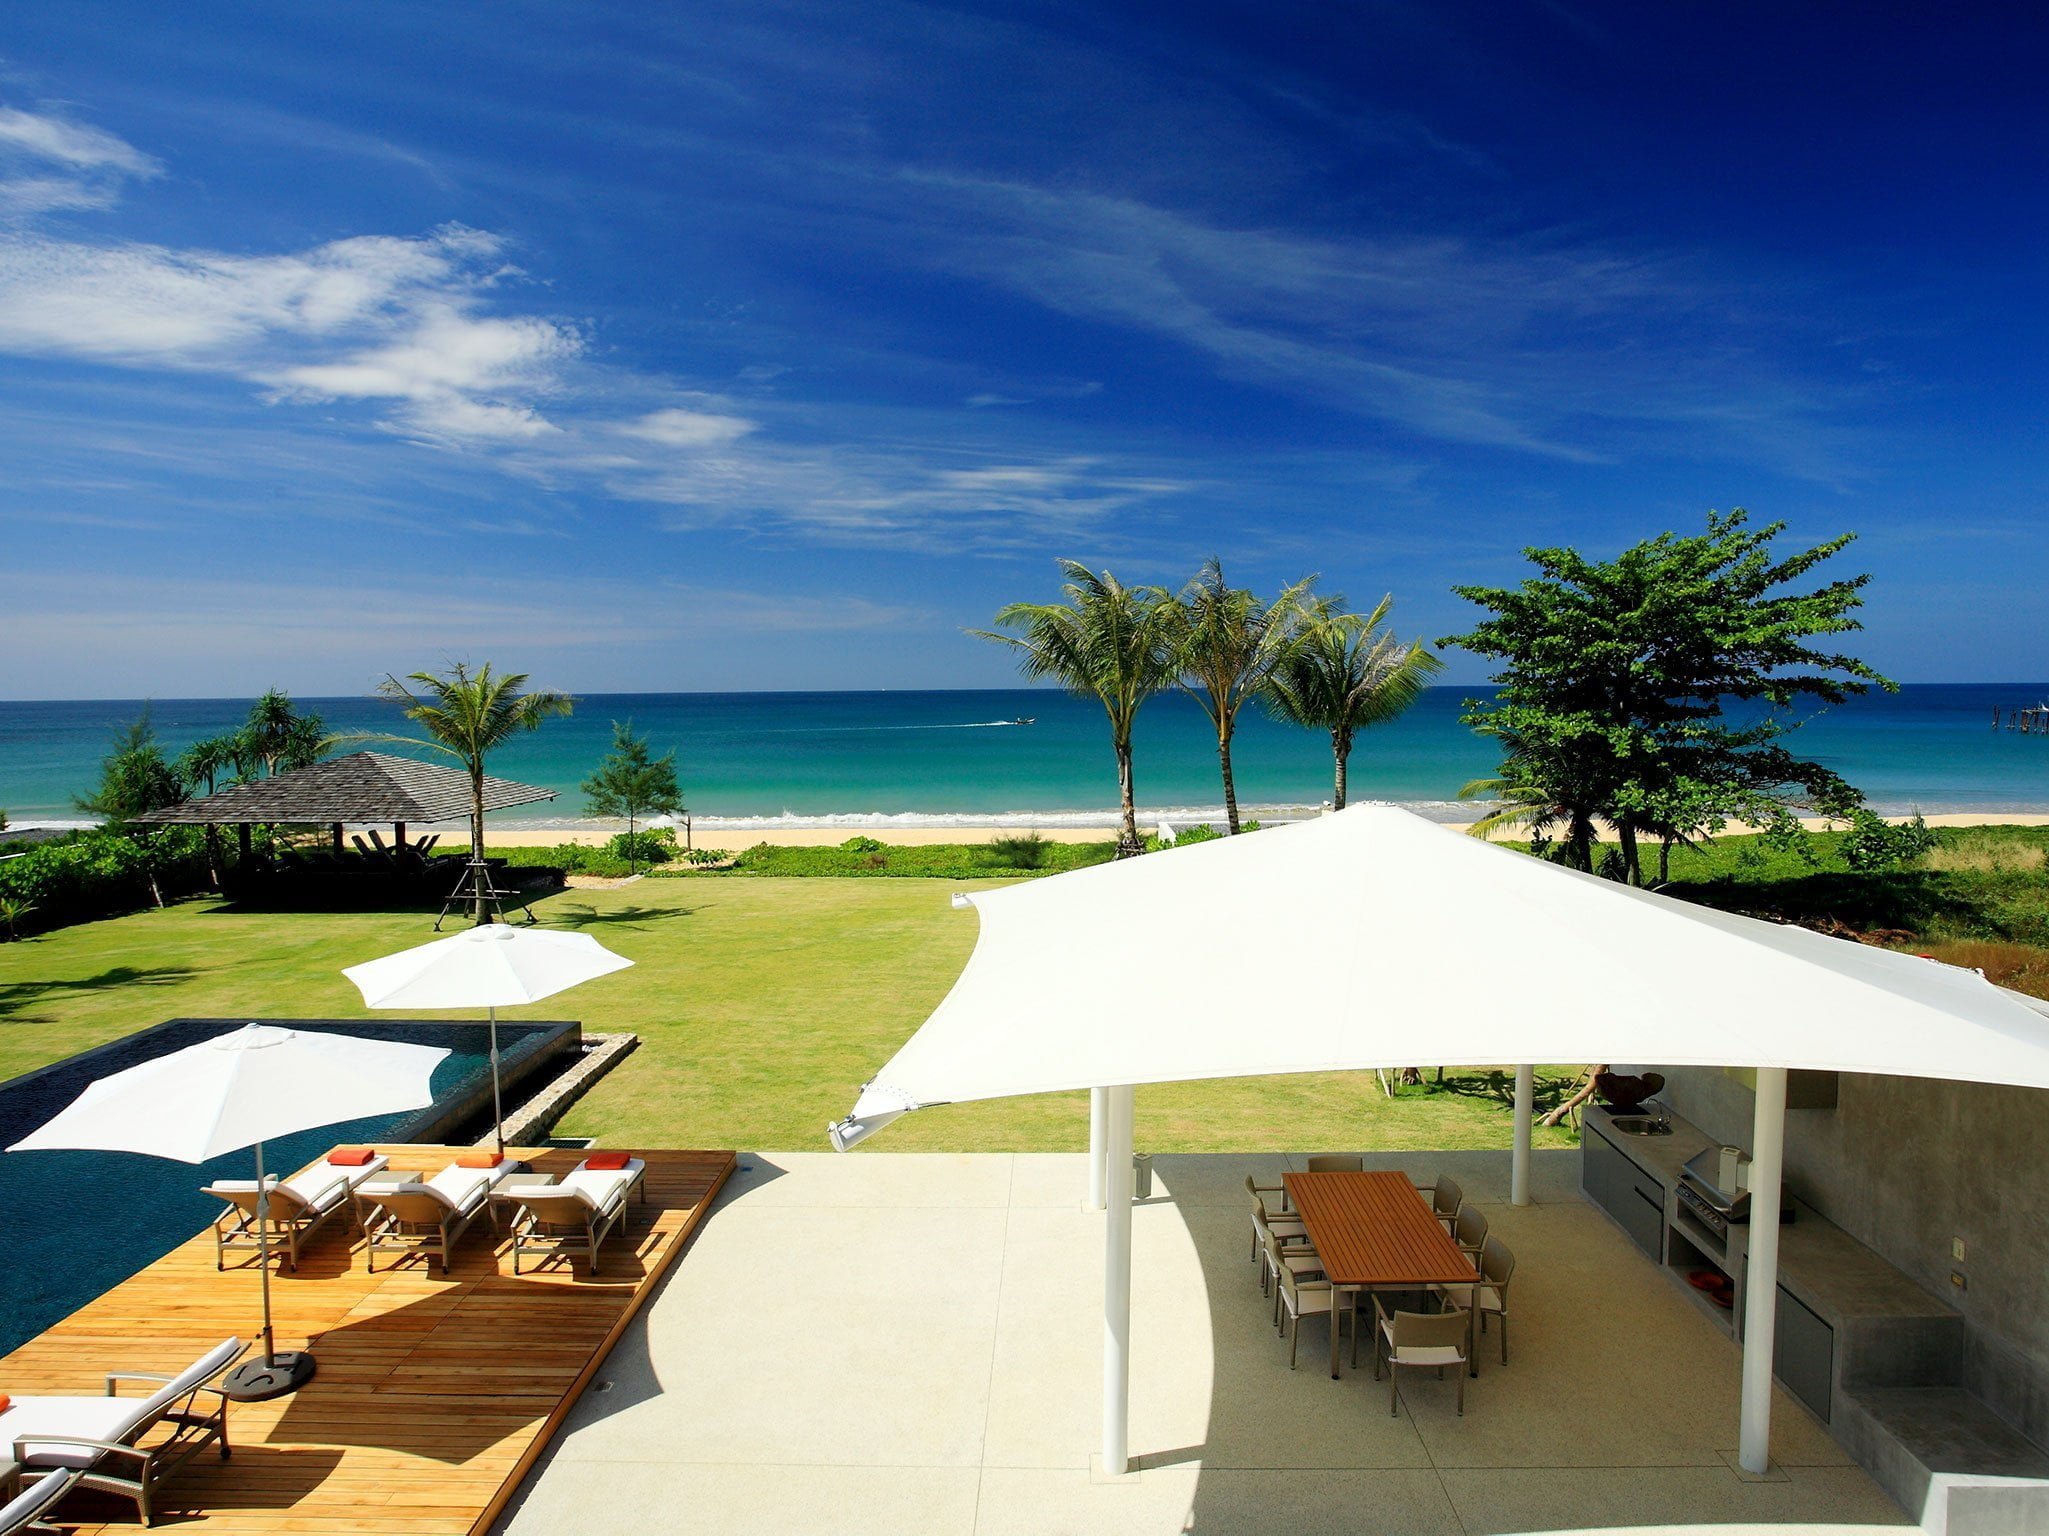 23 villa malee sai breathtaking backdrop